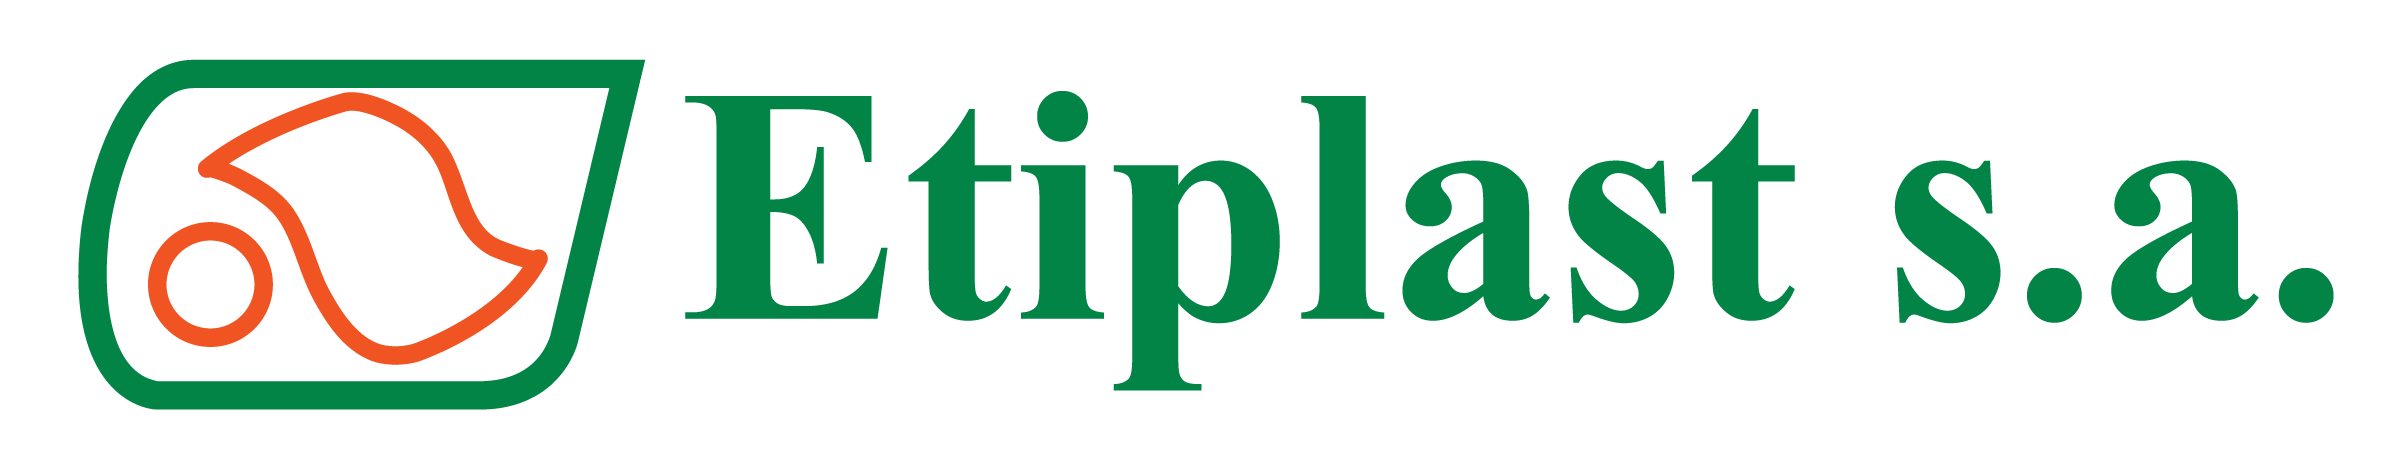 Etiplast logo